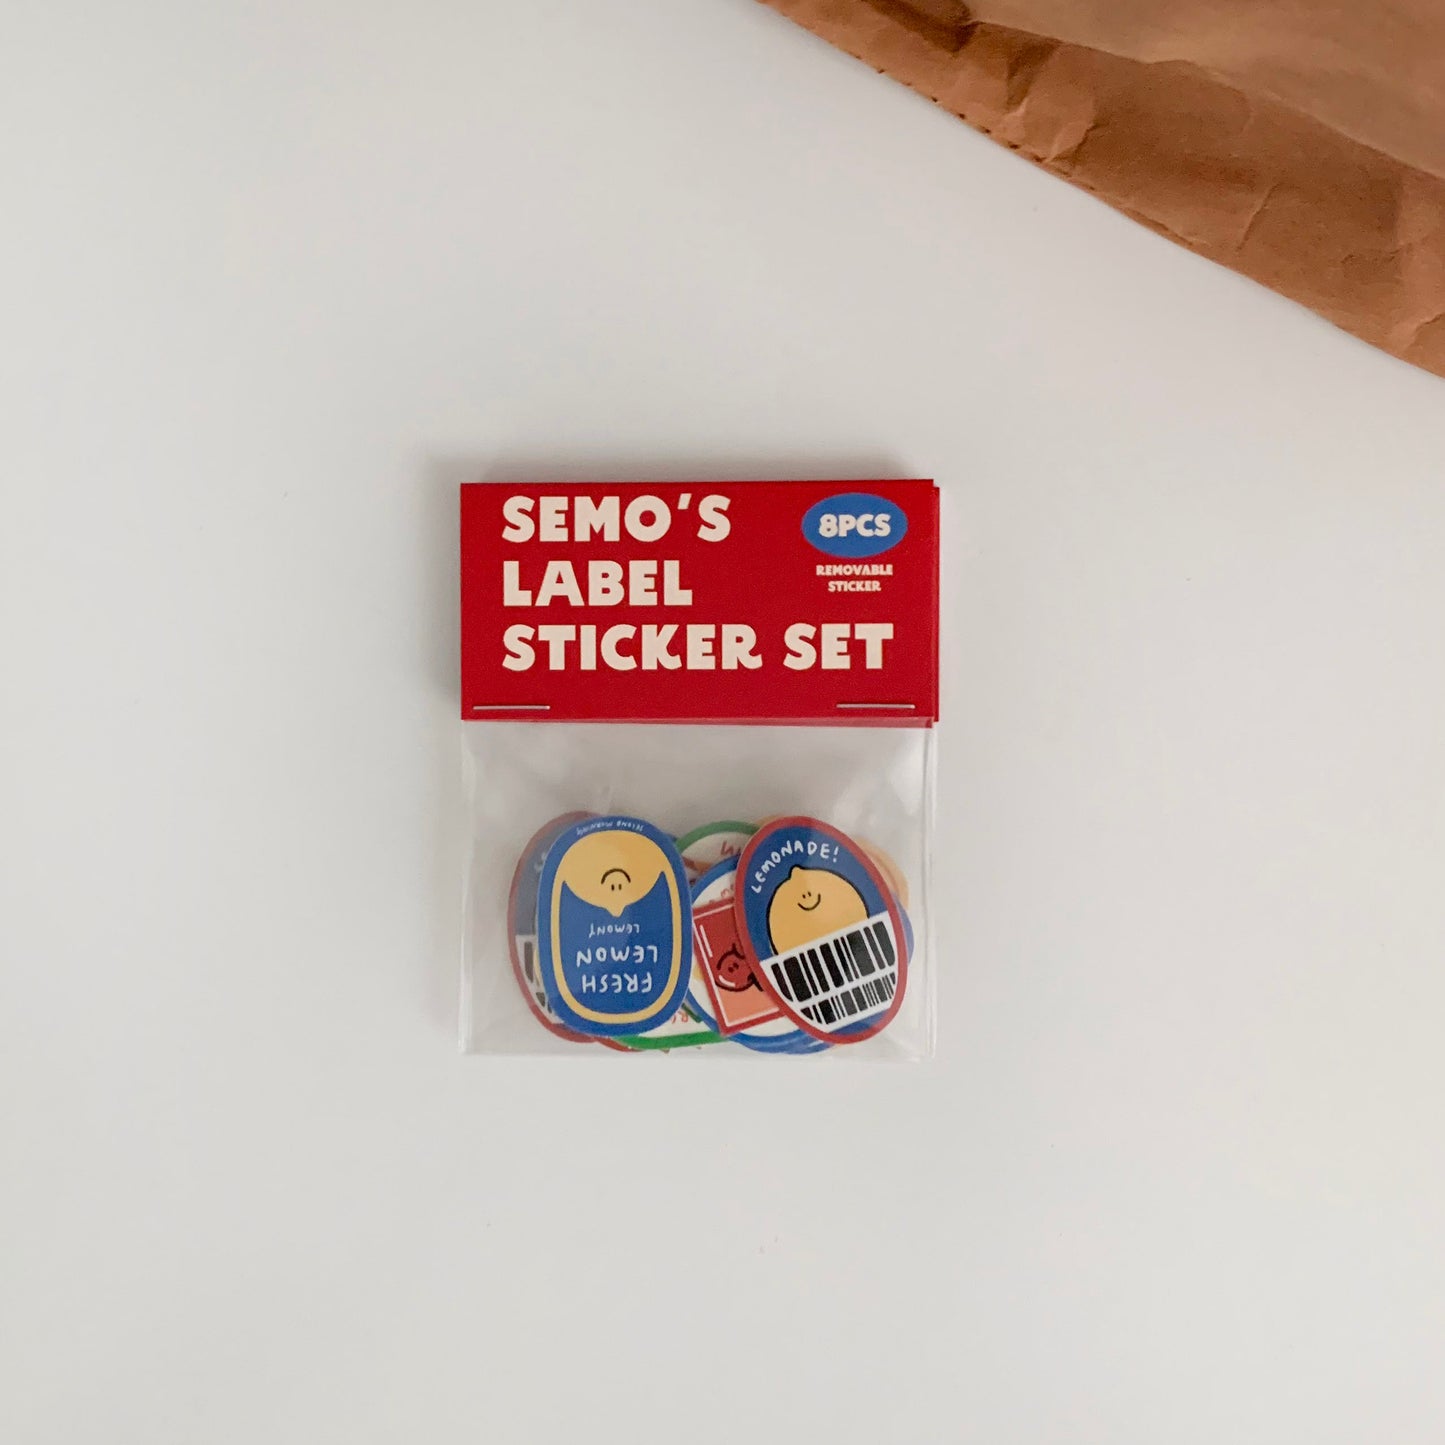 SECOND MORNING Semo's Label Sticker Set